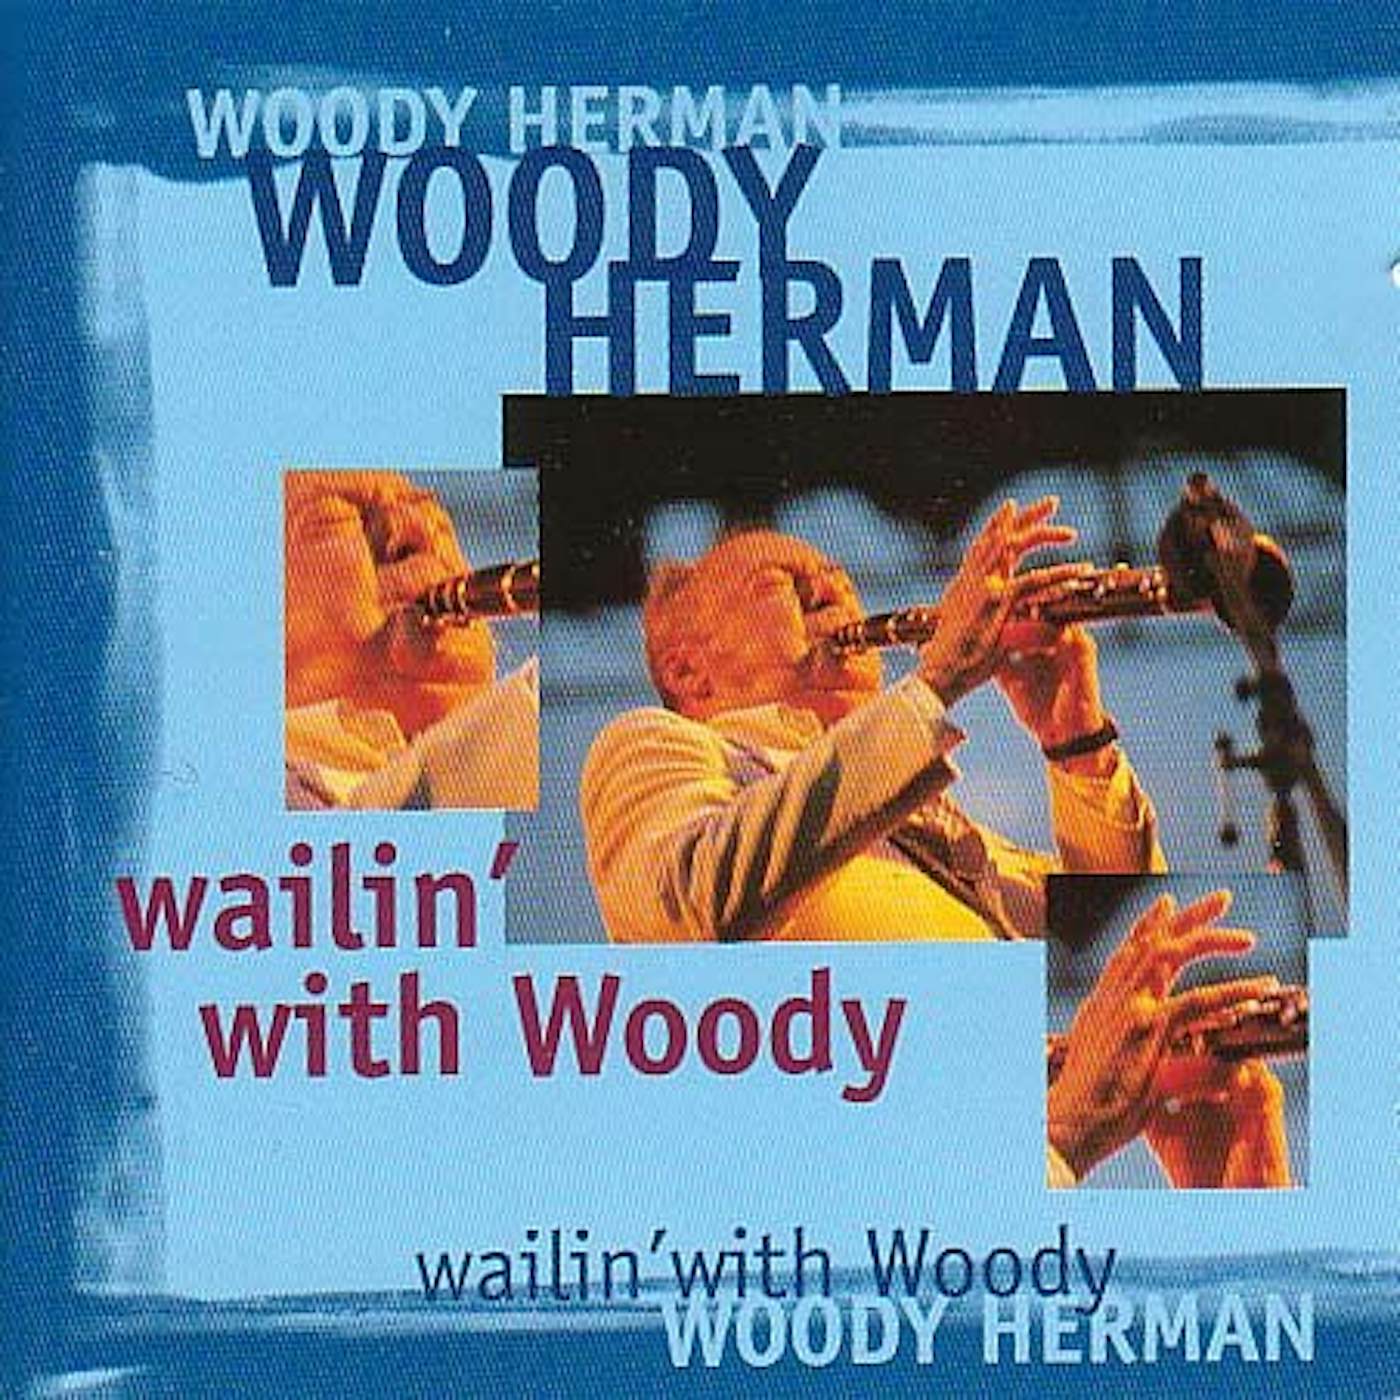 Woody Herman WAILIN WITH WOODY CD